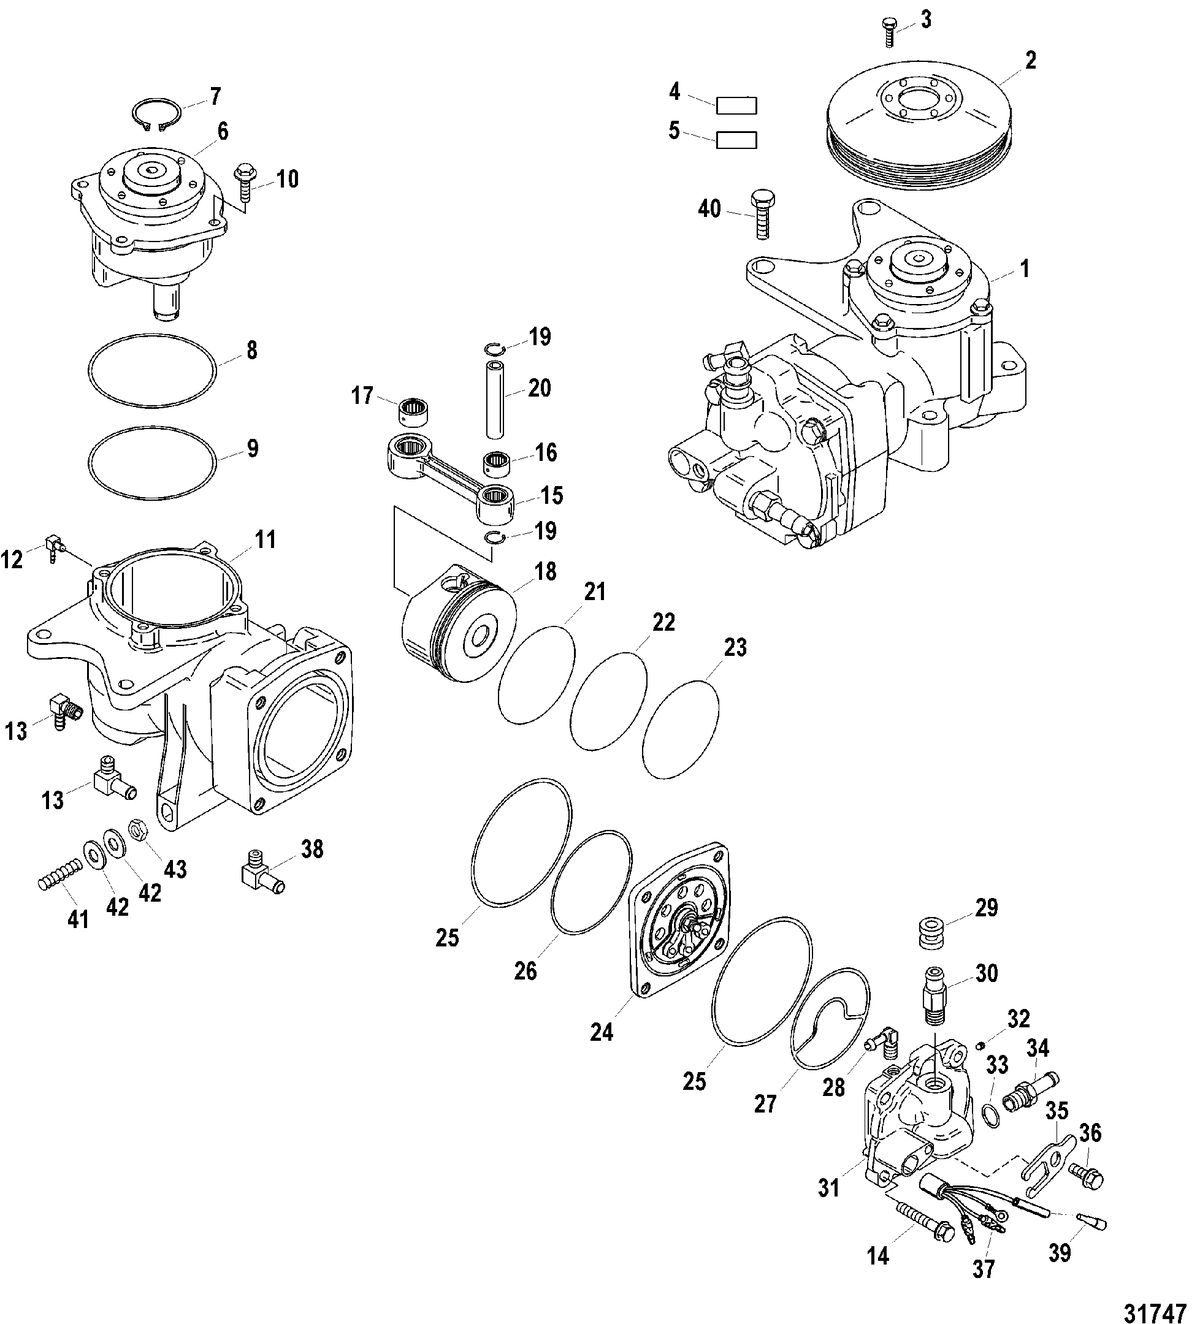 SPORTJET 200 DFI M2 JET DRIVE Air Compressor Components(Design I)